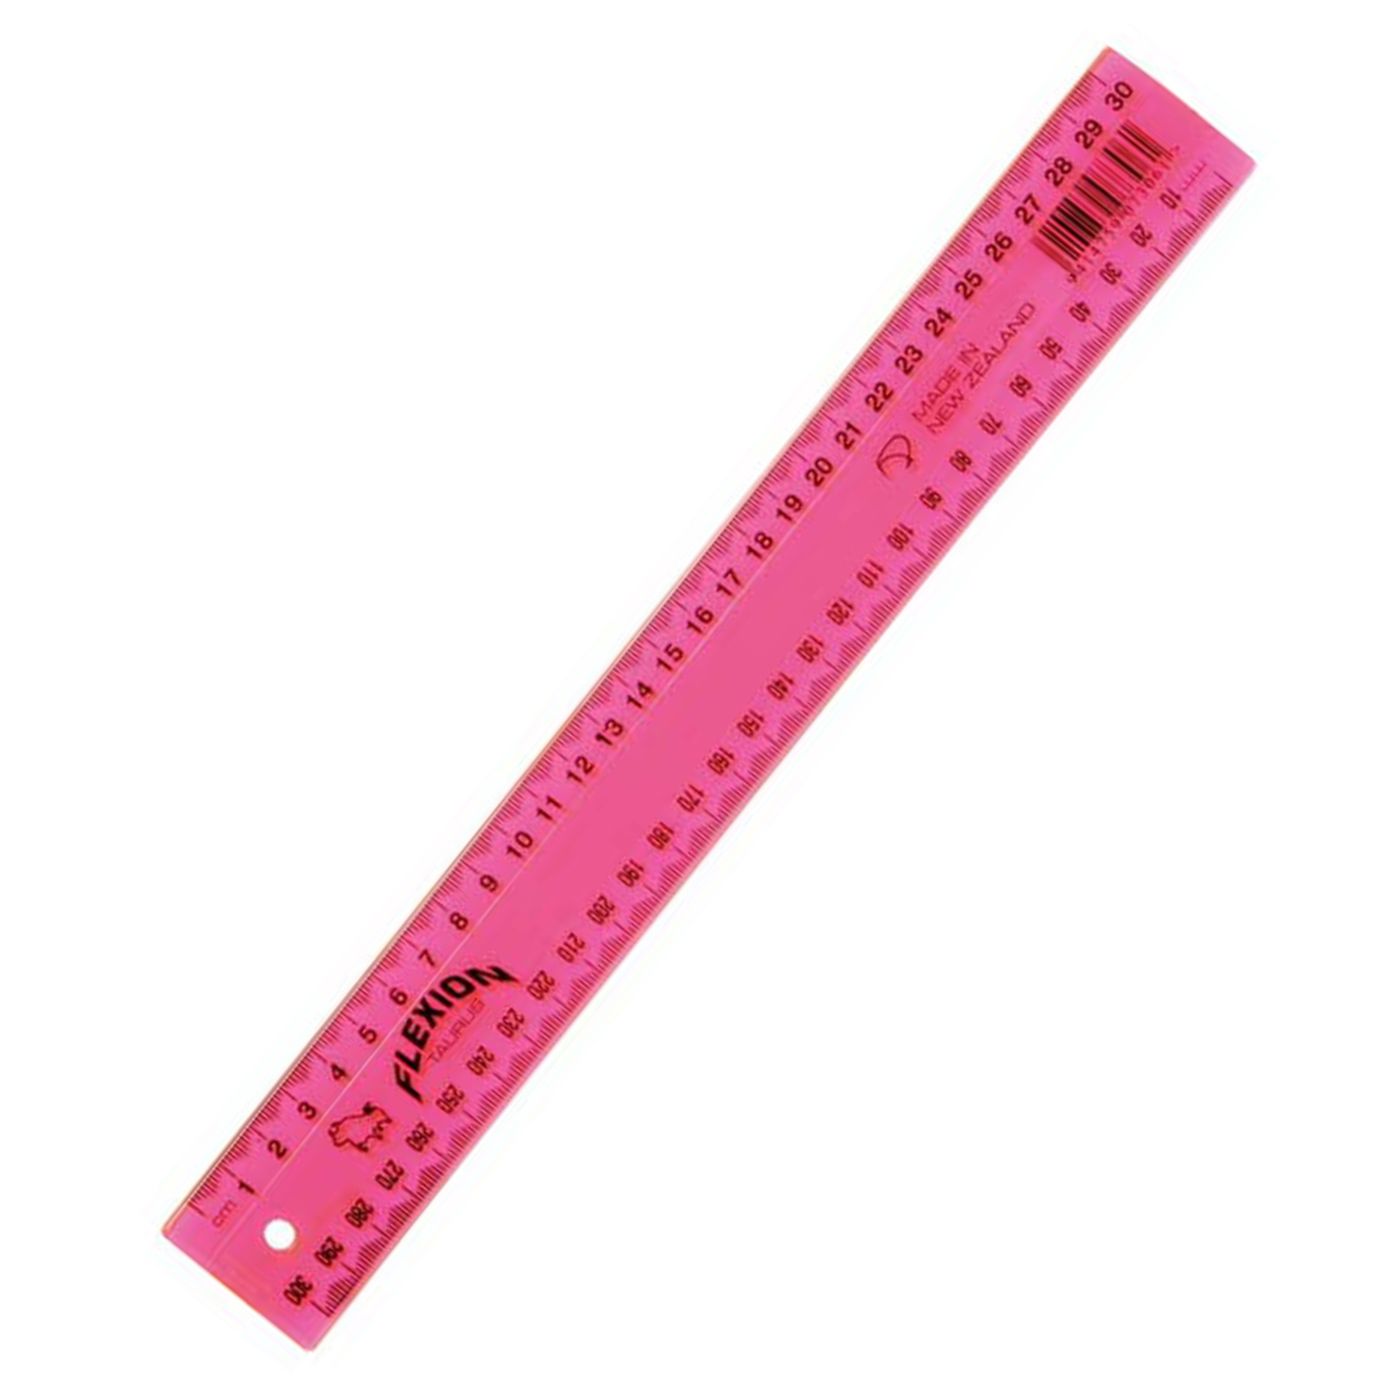 Taurus Flexion Flexible Ruler 30cm Pink